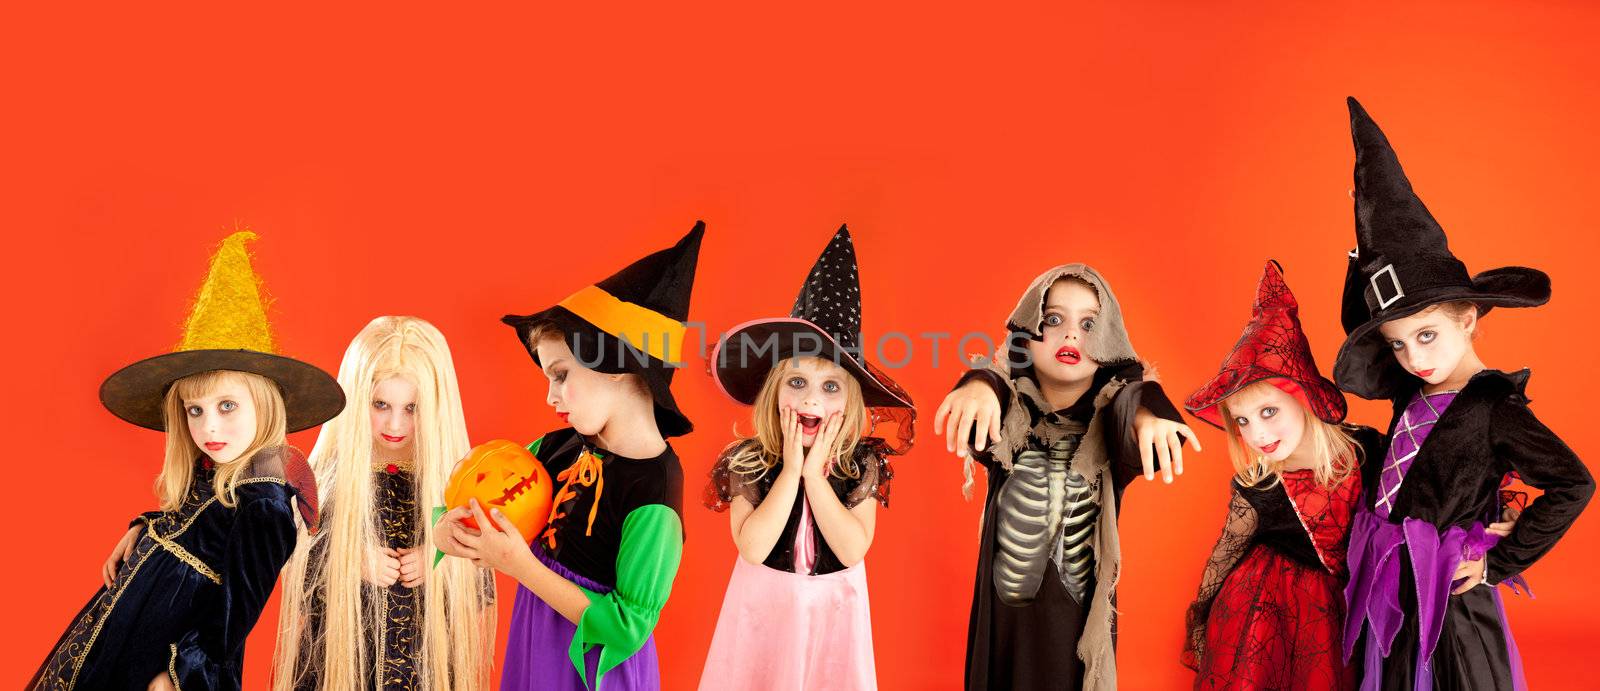 Halloween group of children girls costumes by lunamarina